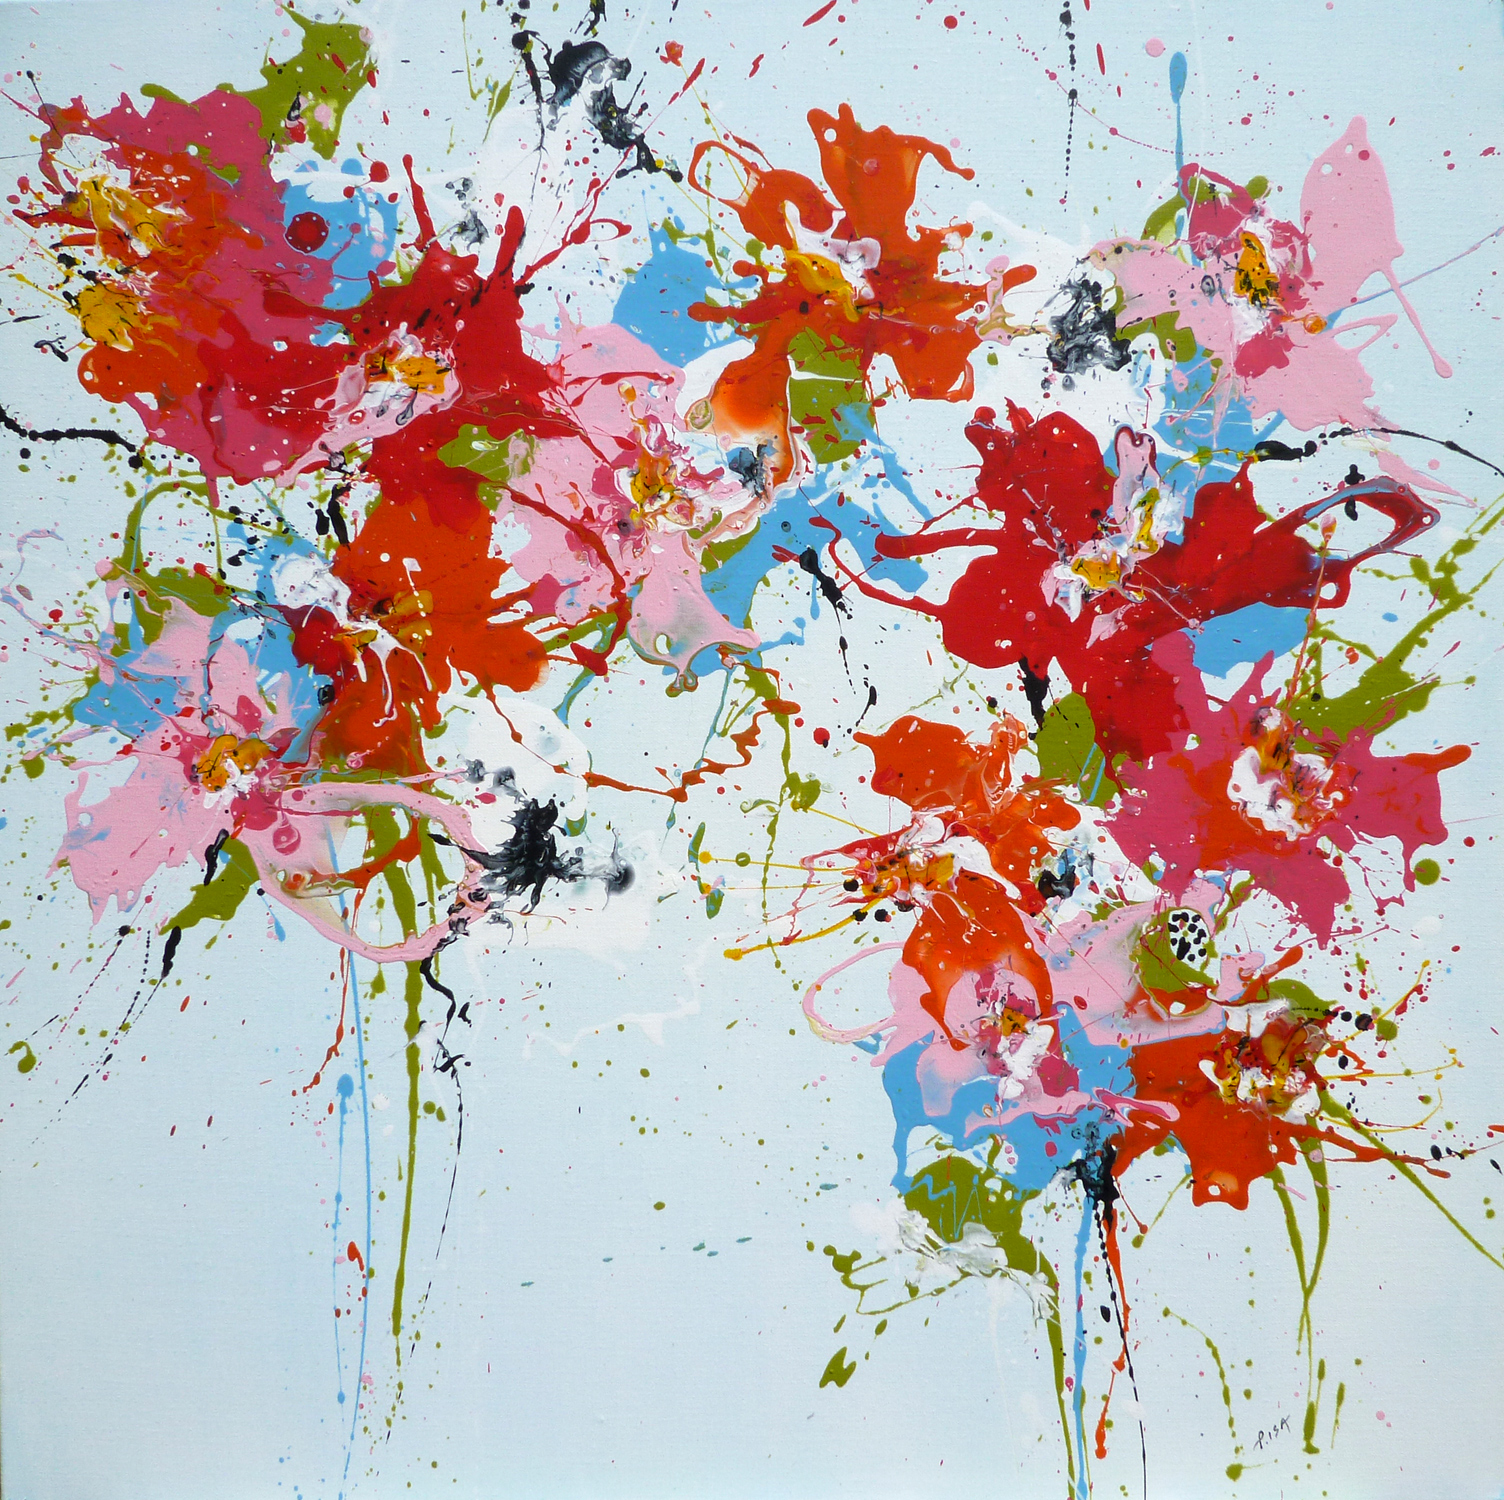 MEDIAS : In the Siott Gallery Blog : “February Calls for Colorful Isabelle Pelletane Paintings.” (UK)